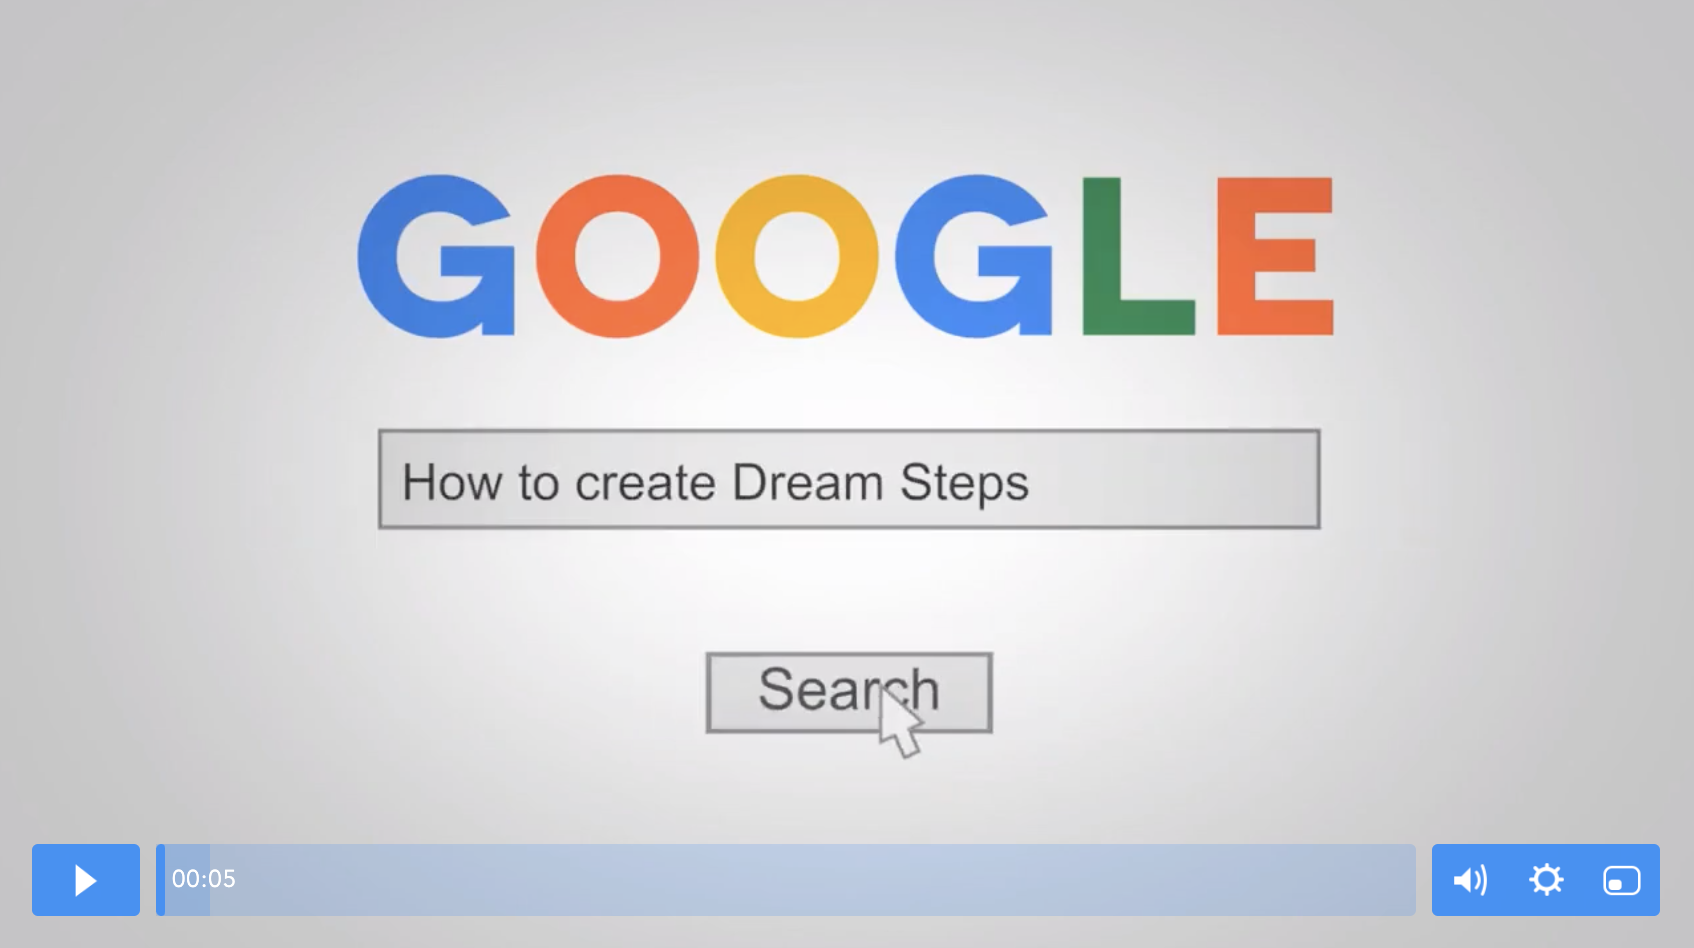 How to create Dream Steps